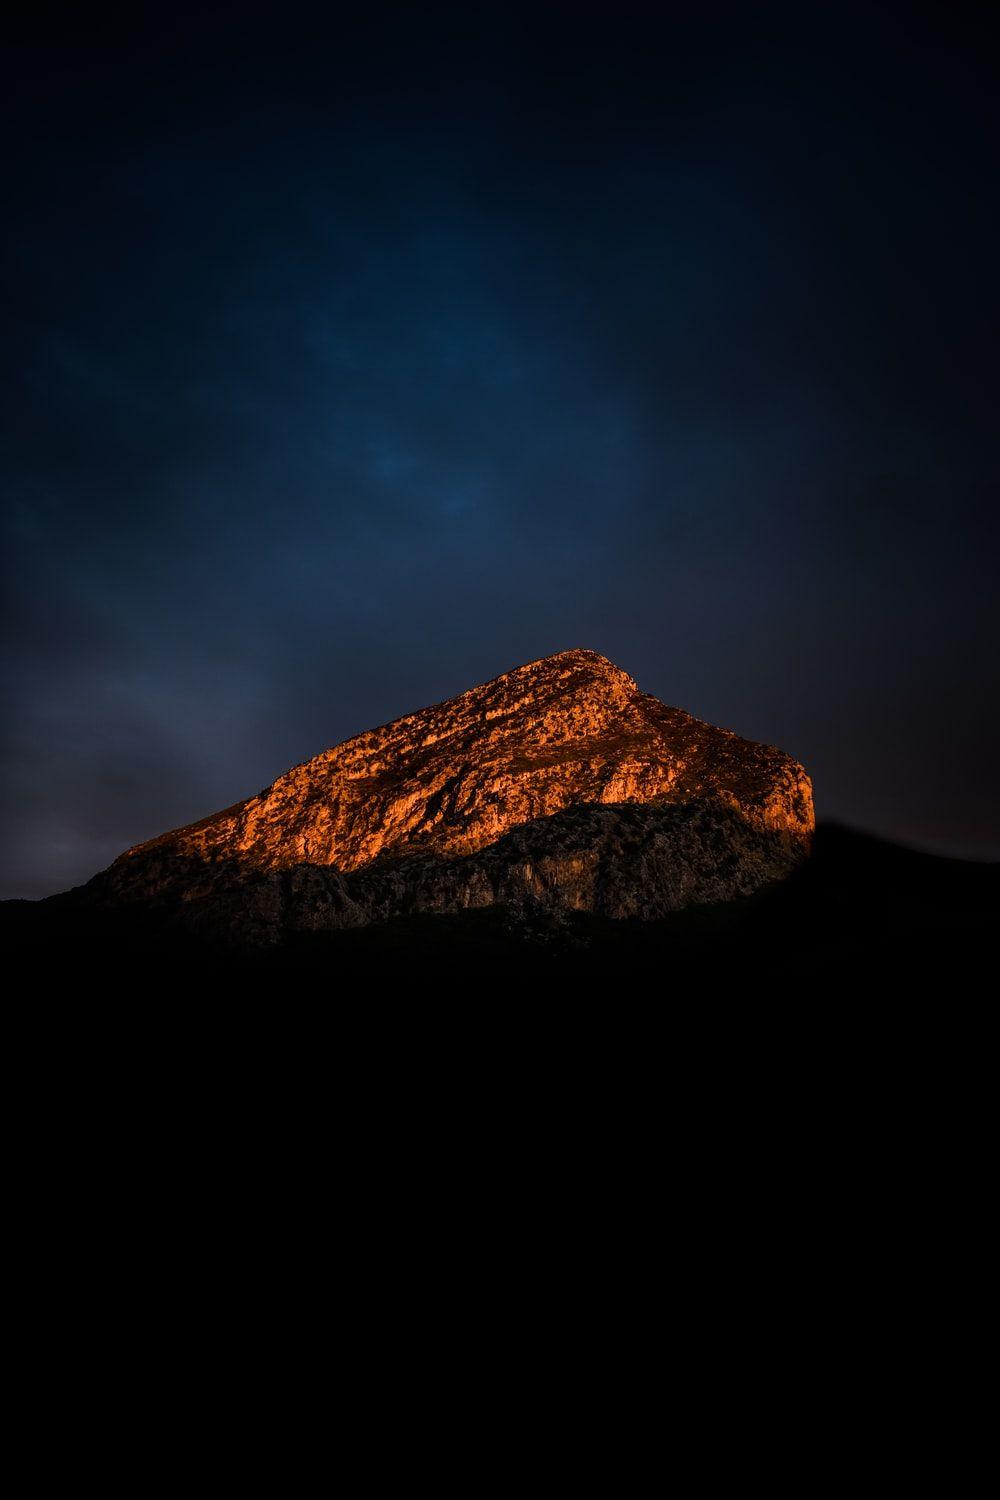 4K Dark Mountain Wallpapers - Top Free 4K Dark Mountain Backgrounds